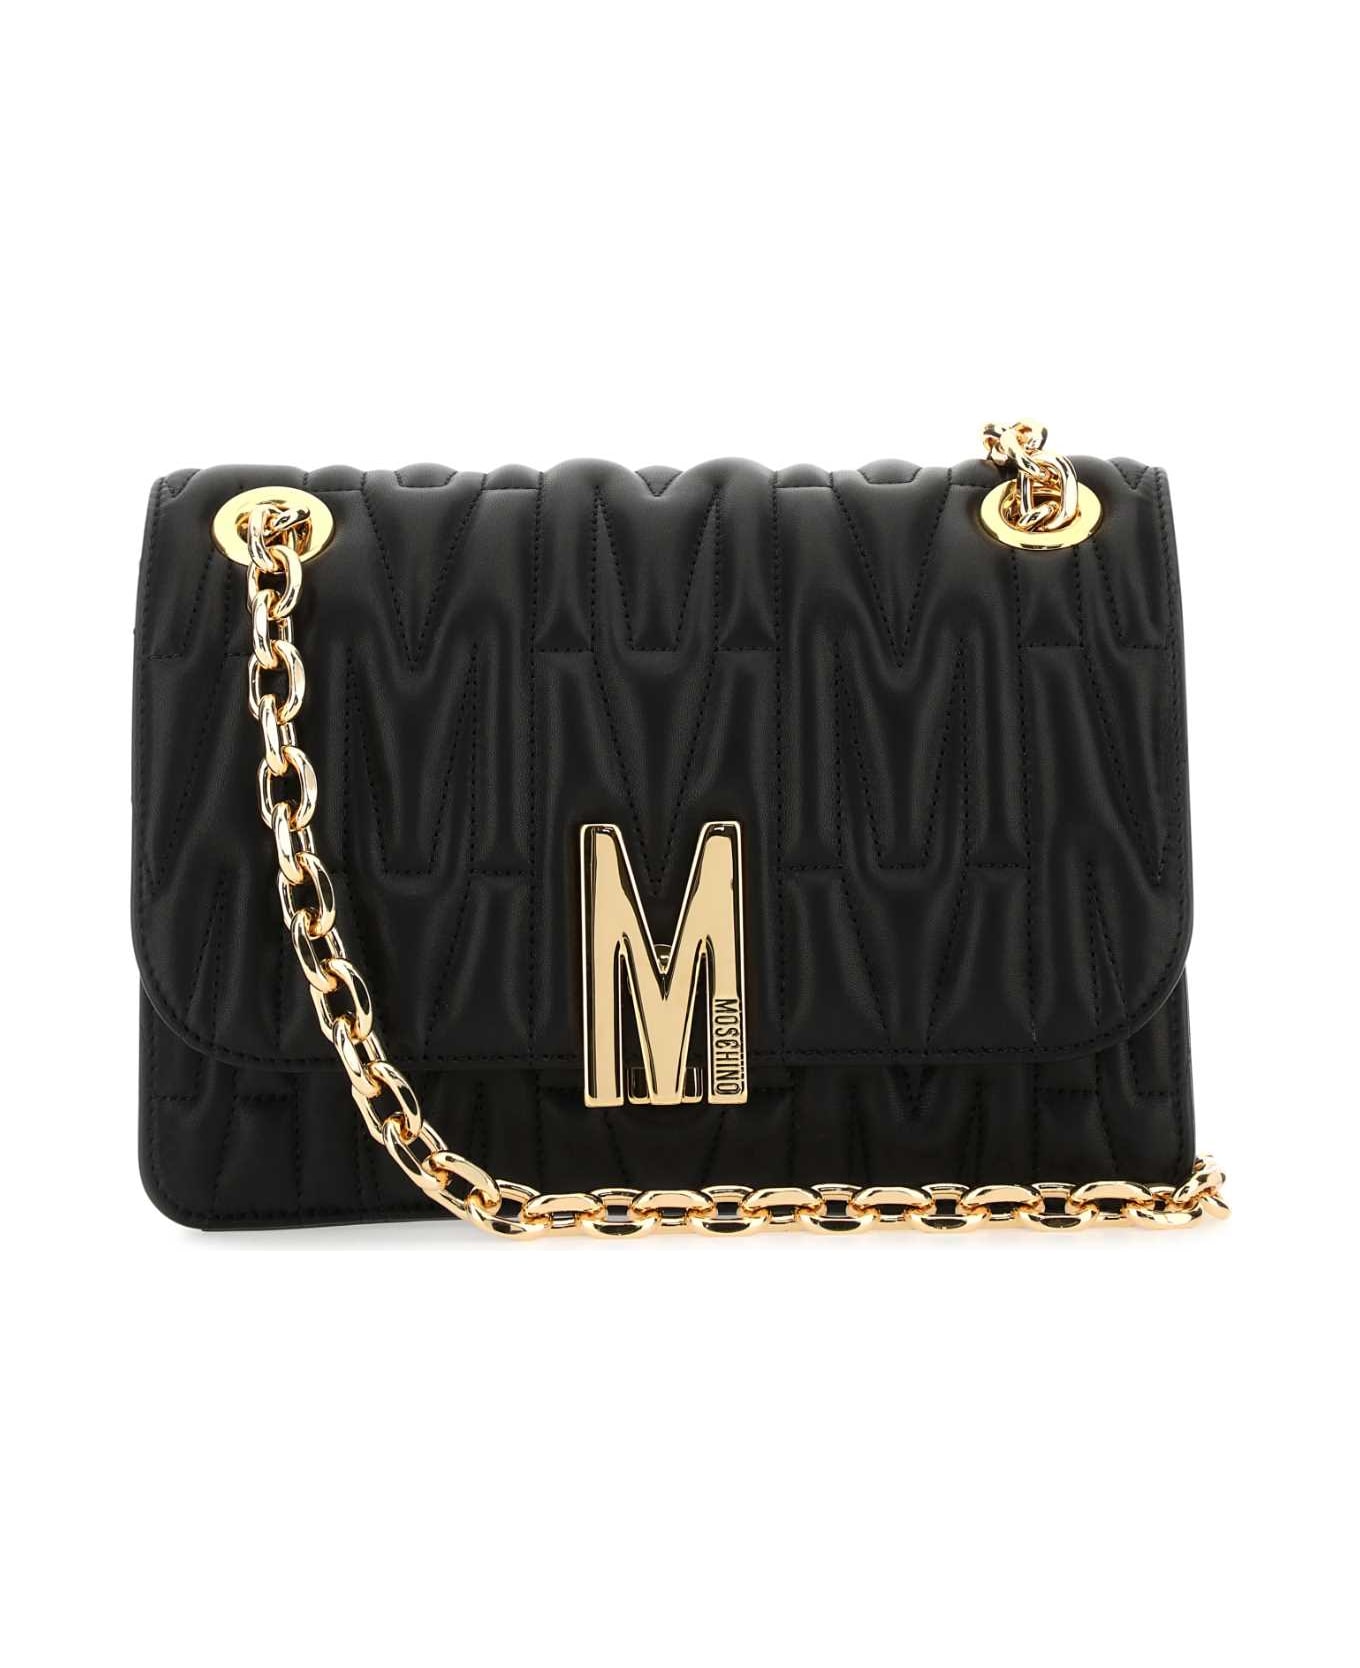 Moschino Black Leather M Crossbody Bag - 1555